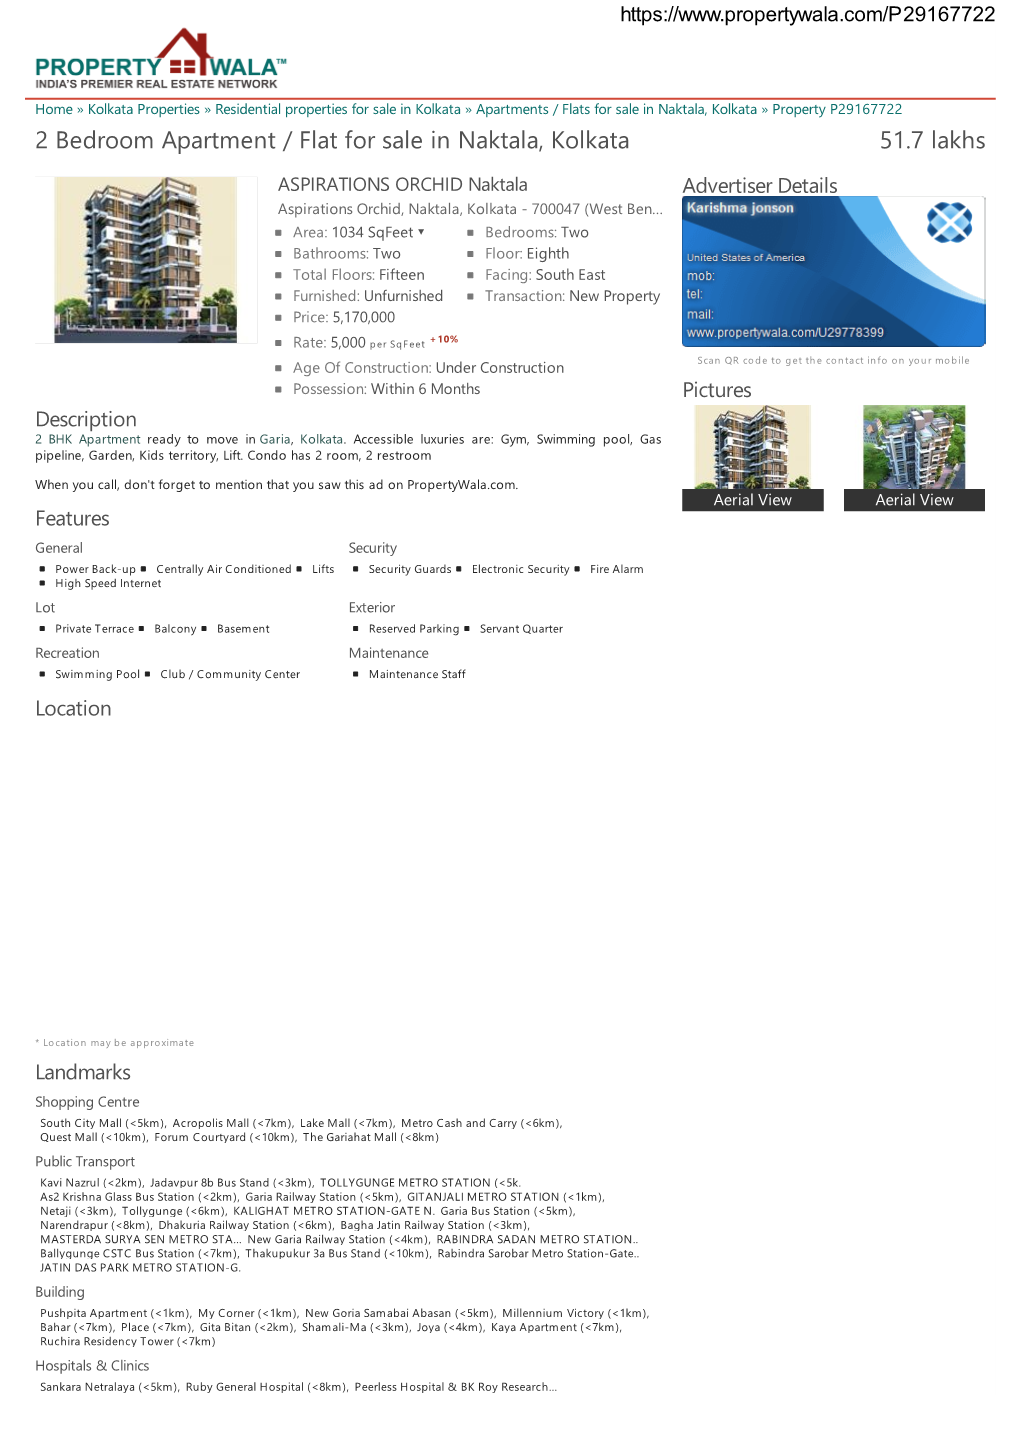 2 Bedroom Apartment / Flat for Sale in Naktala